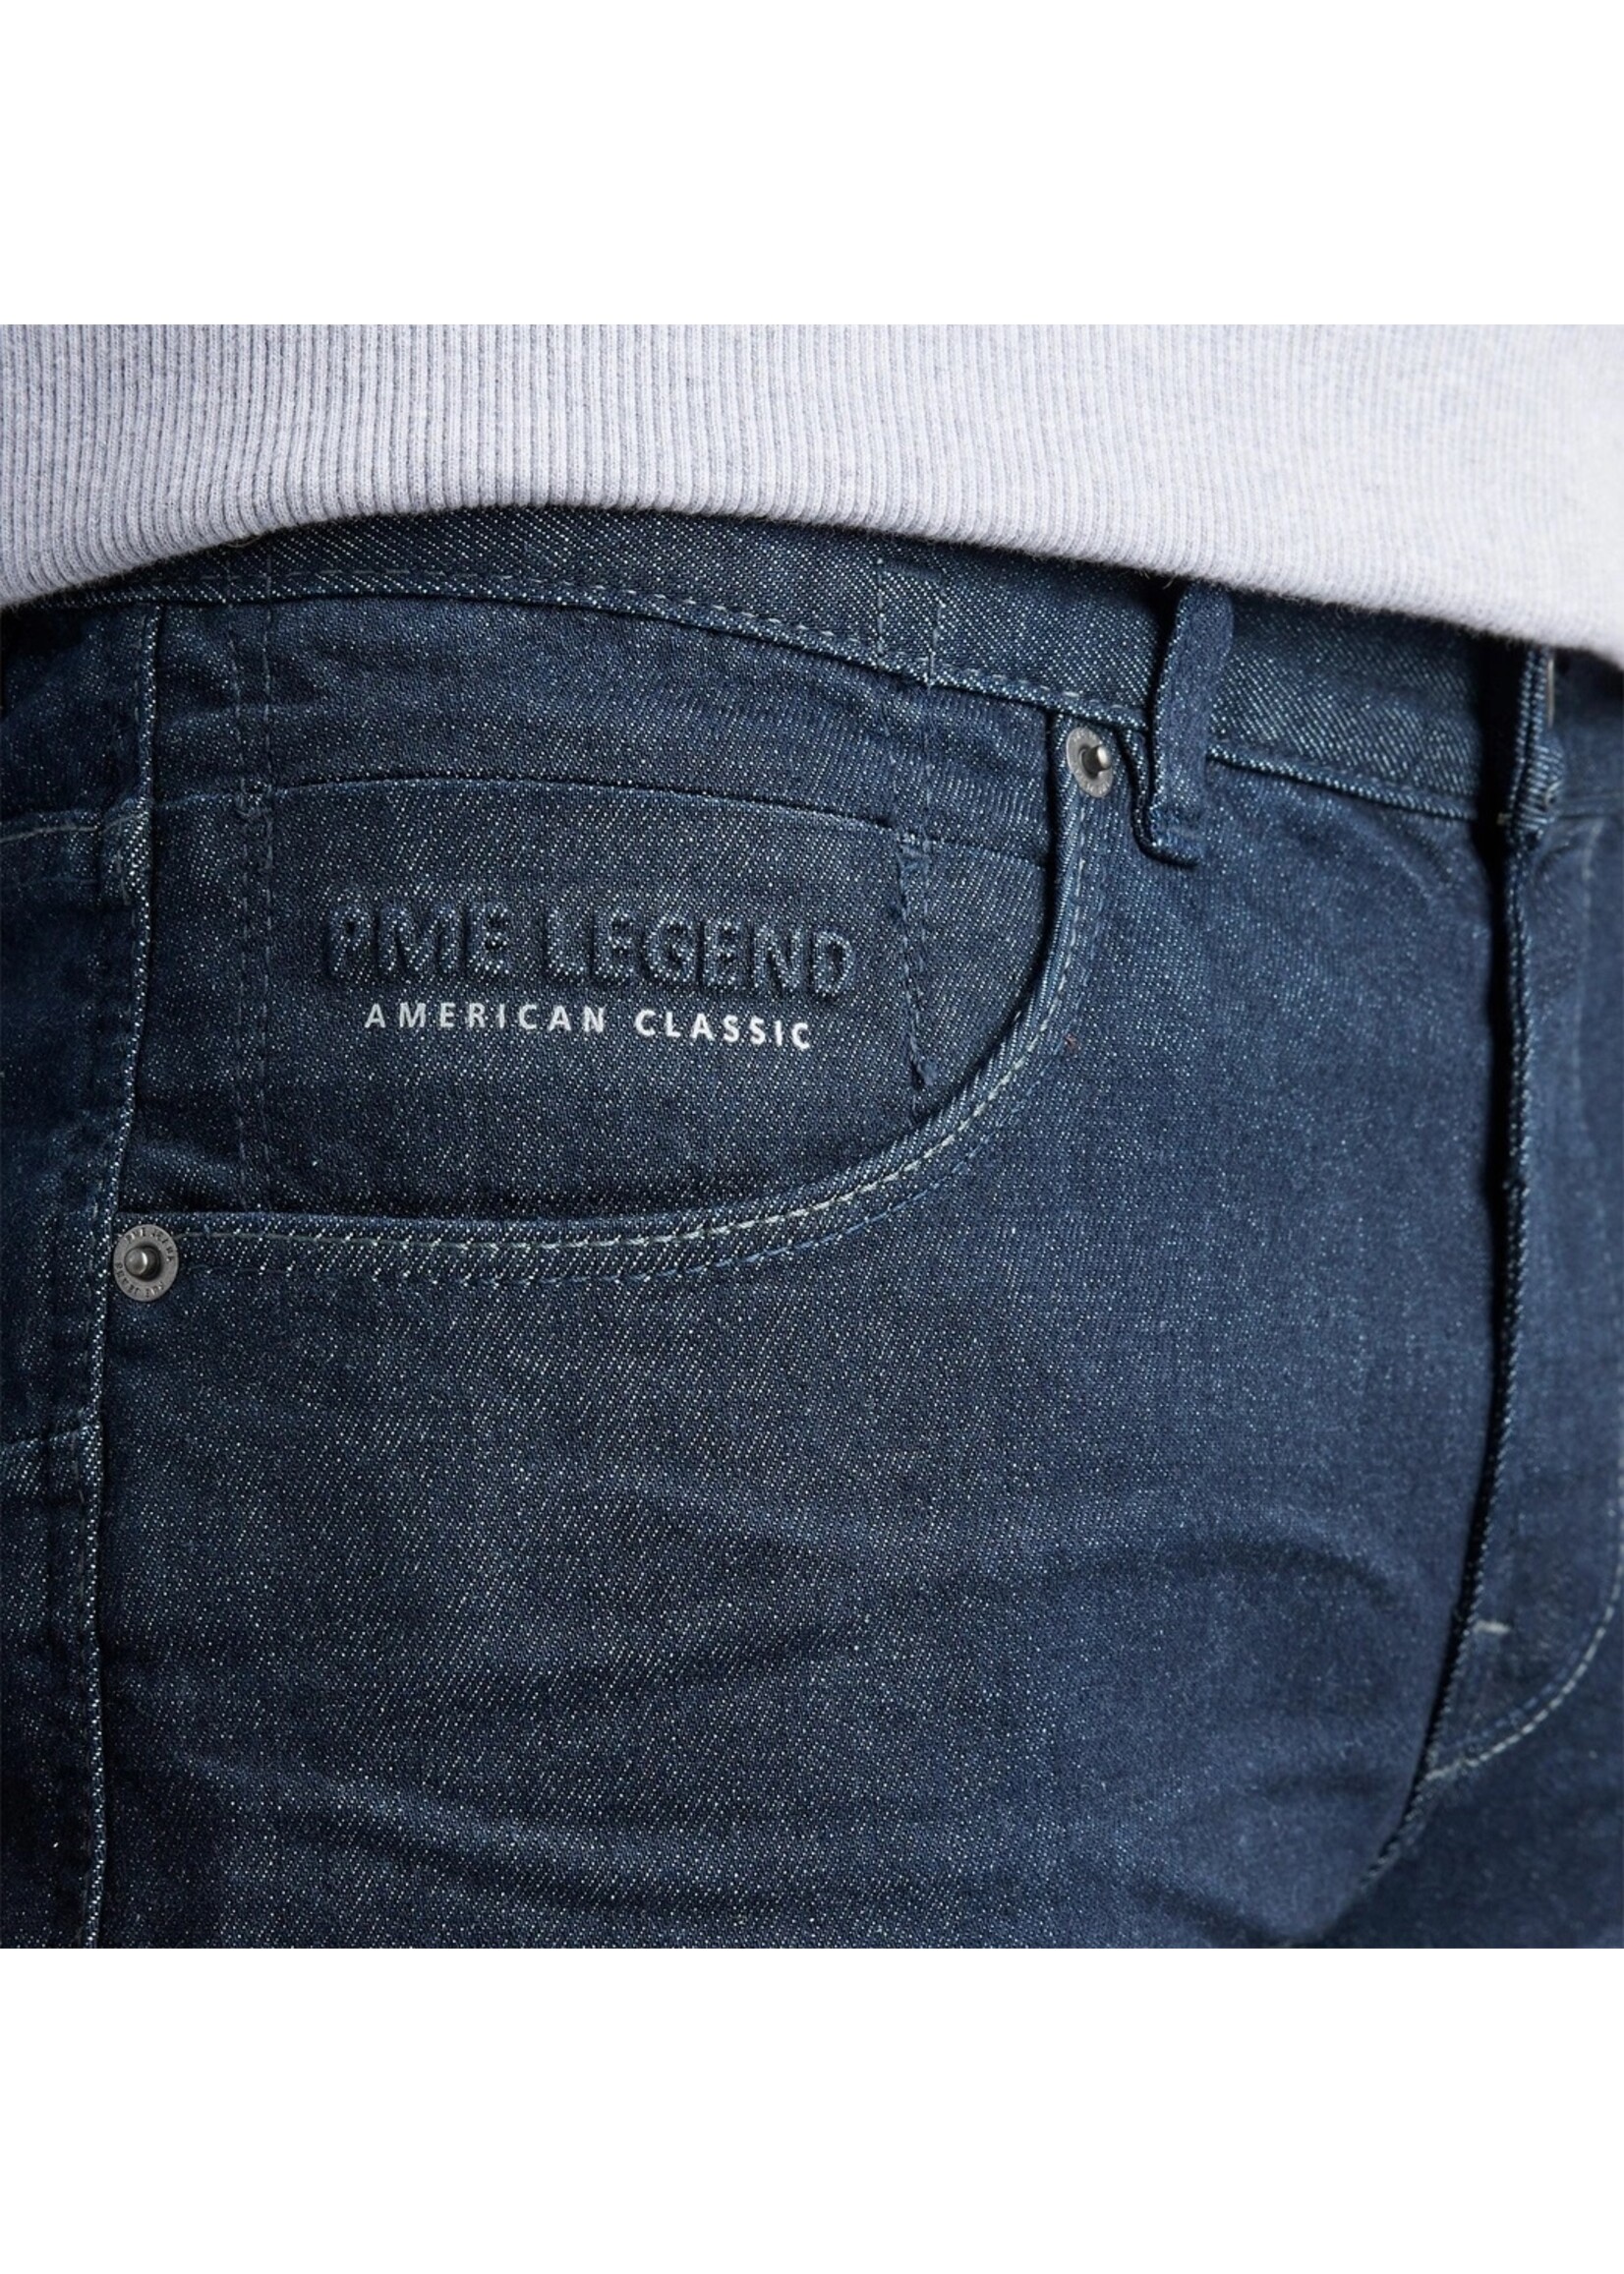 PME-Legend Nightflight Jeans Low Rinsed Wash